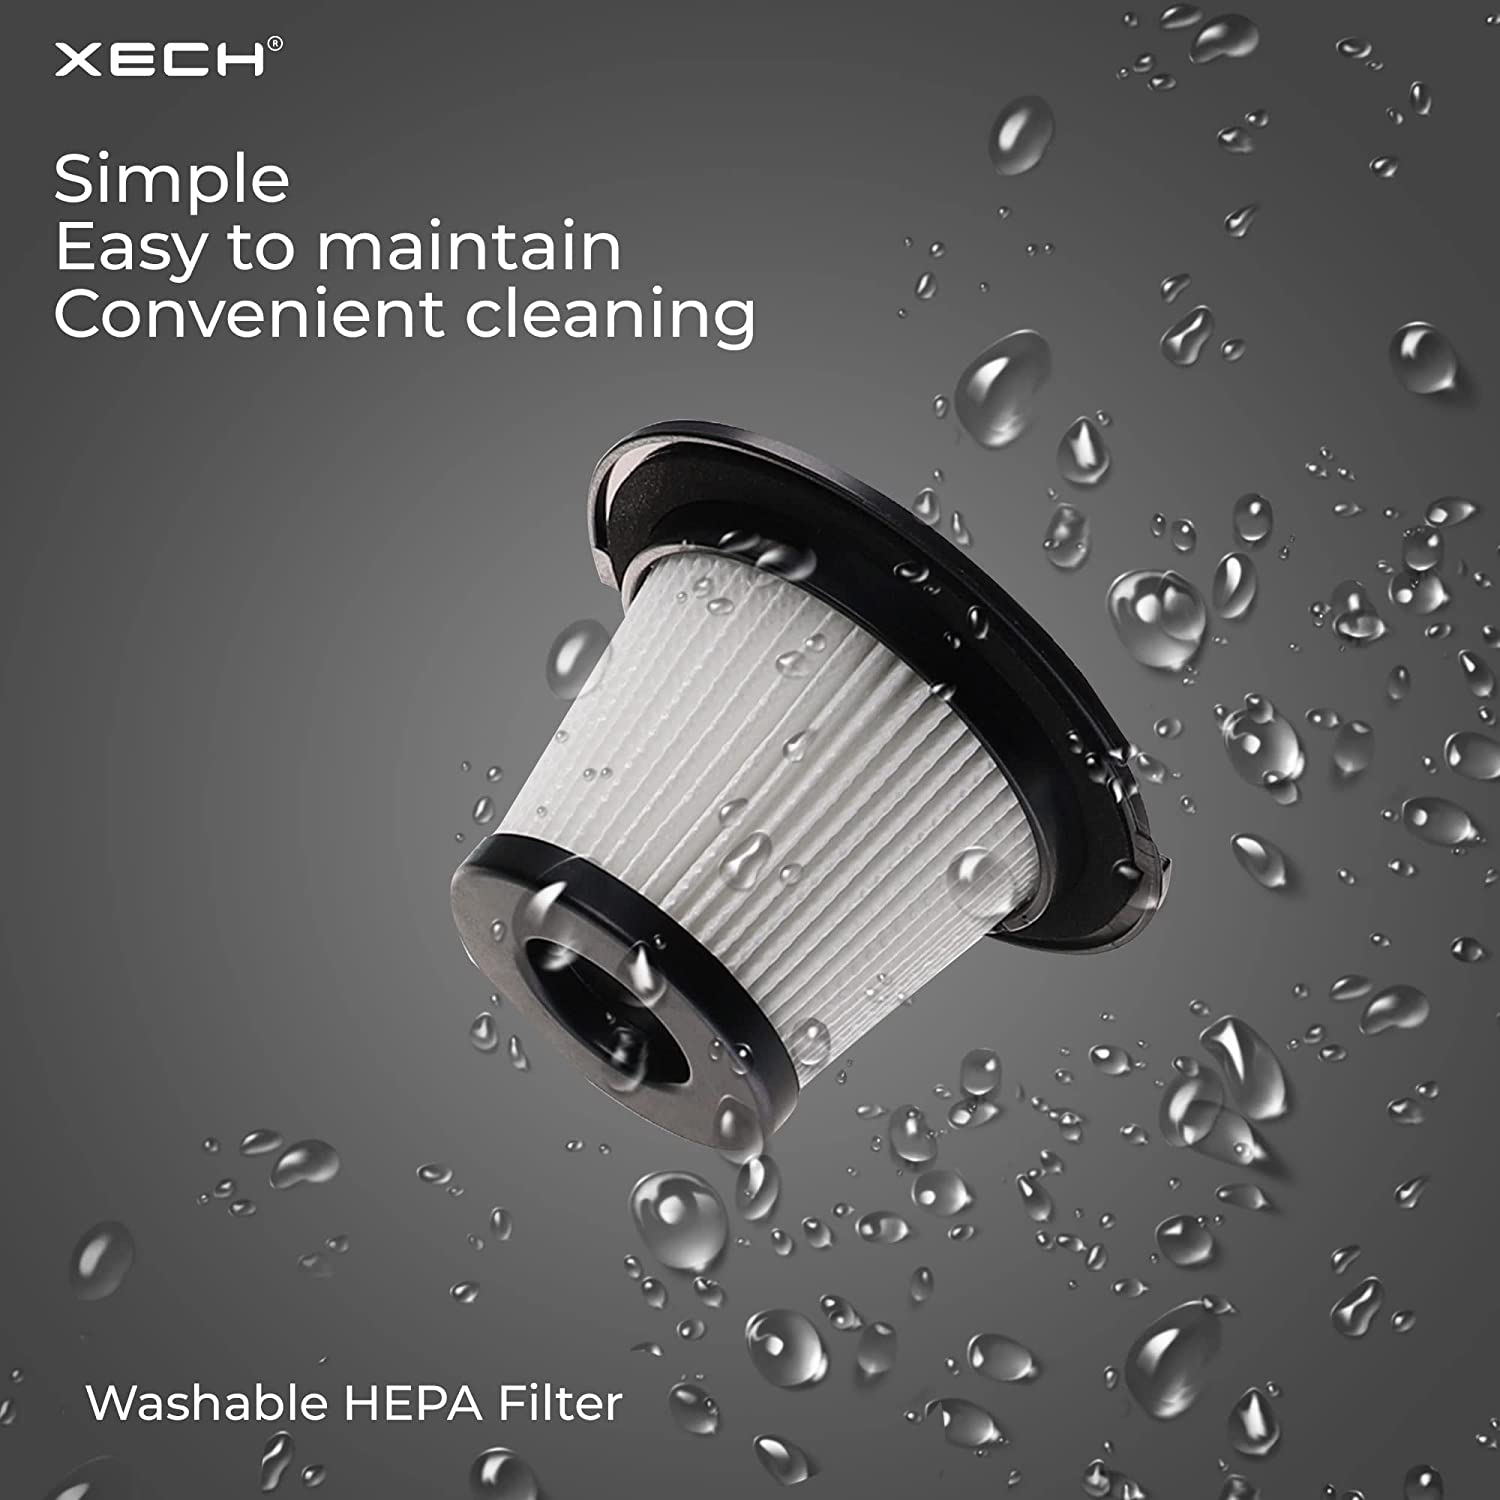 XECH - V-GUN - Cordless Rechargeable Handheld Vacuum Cleaner